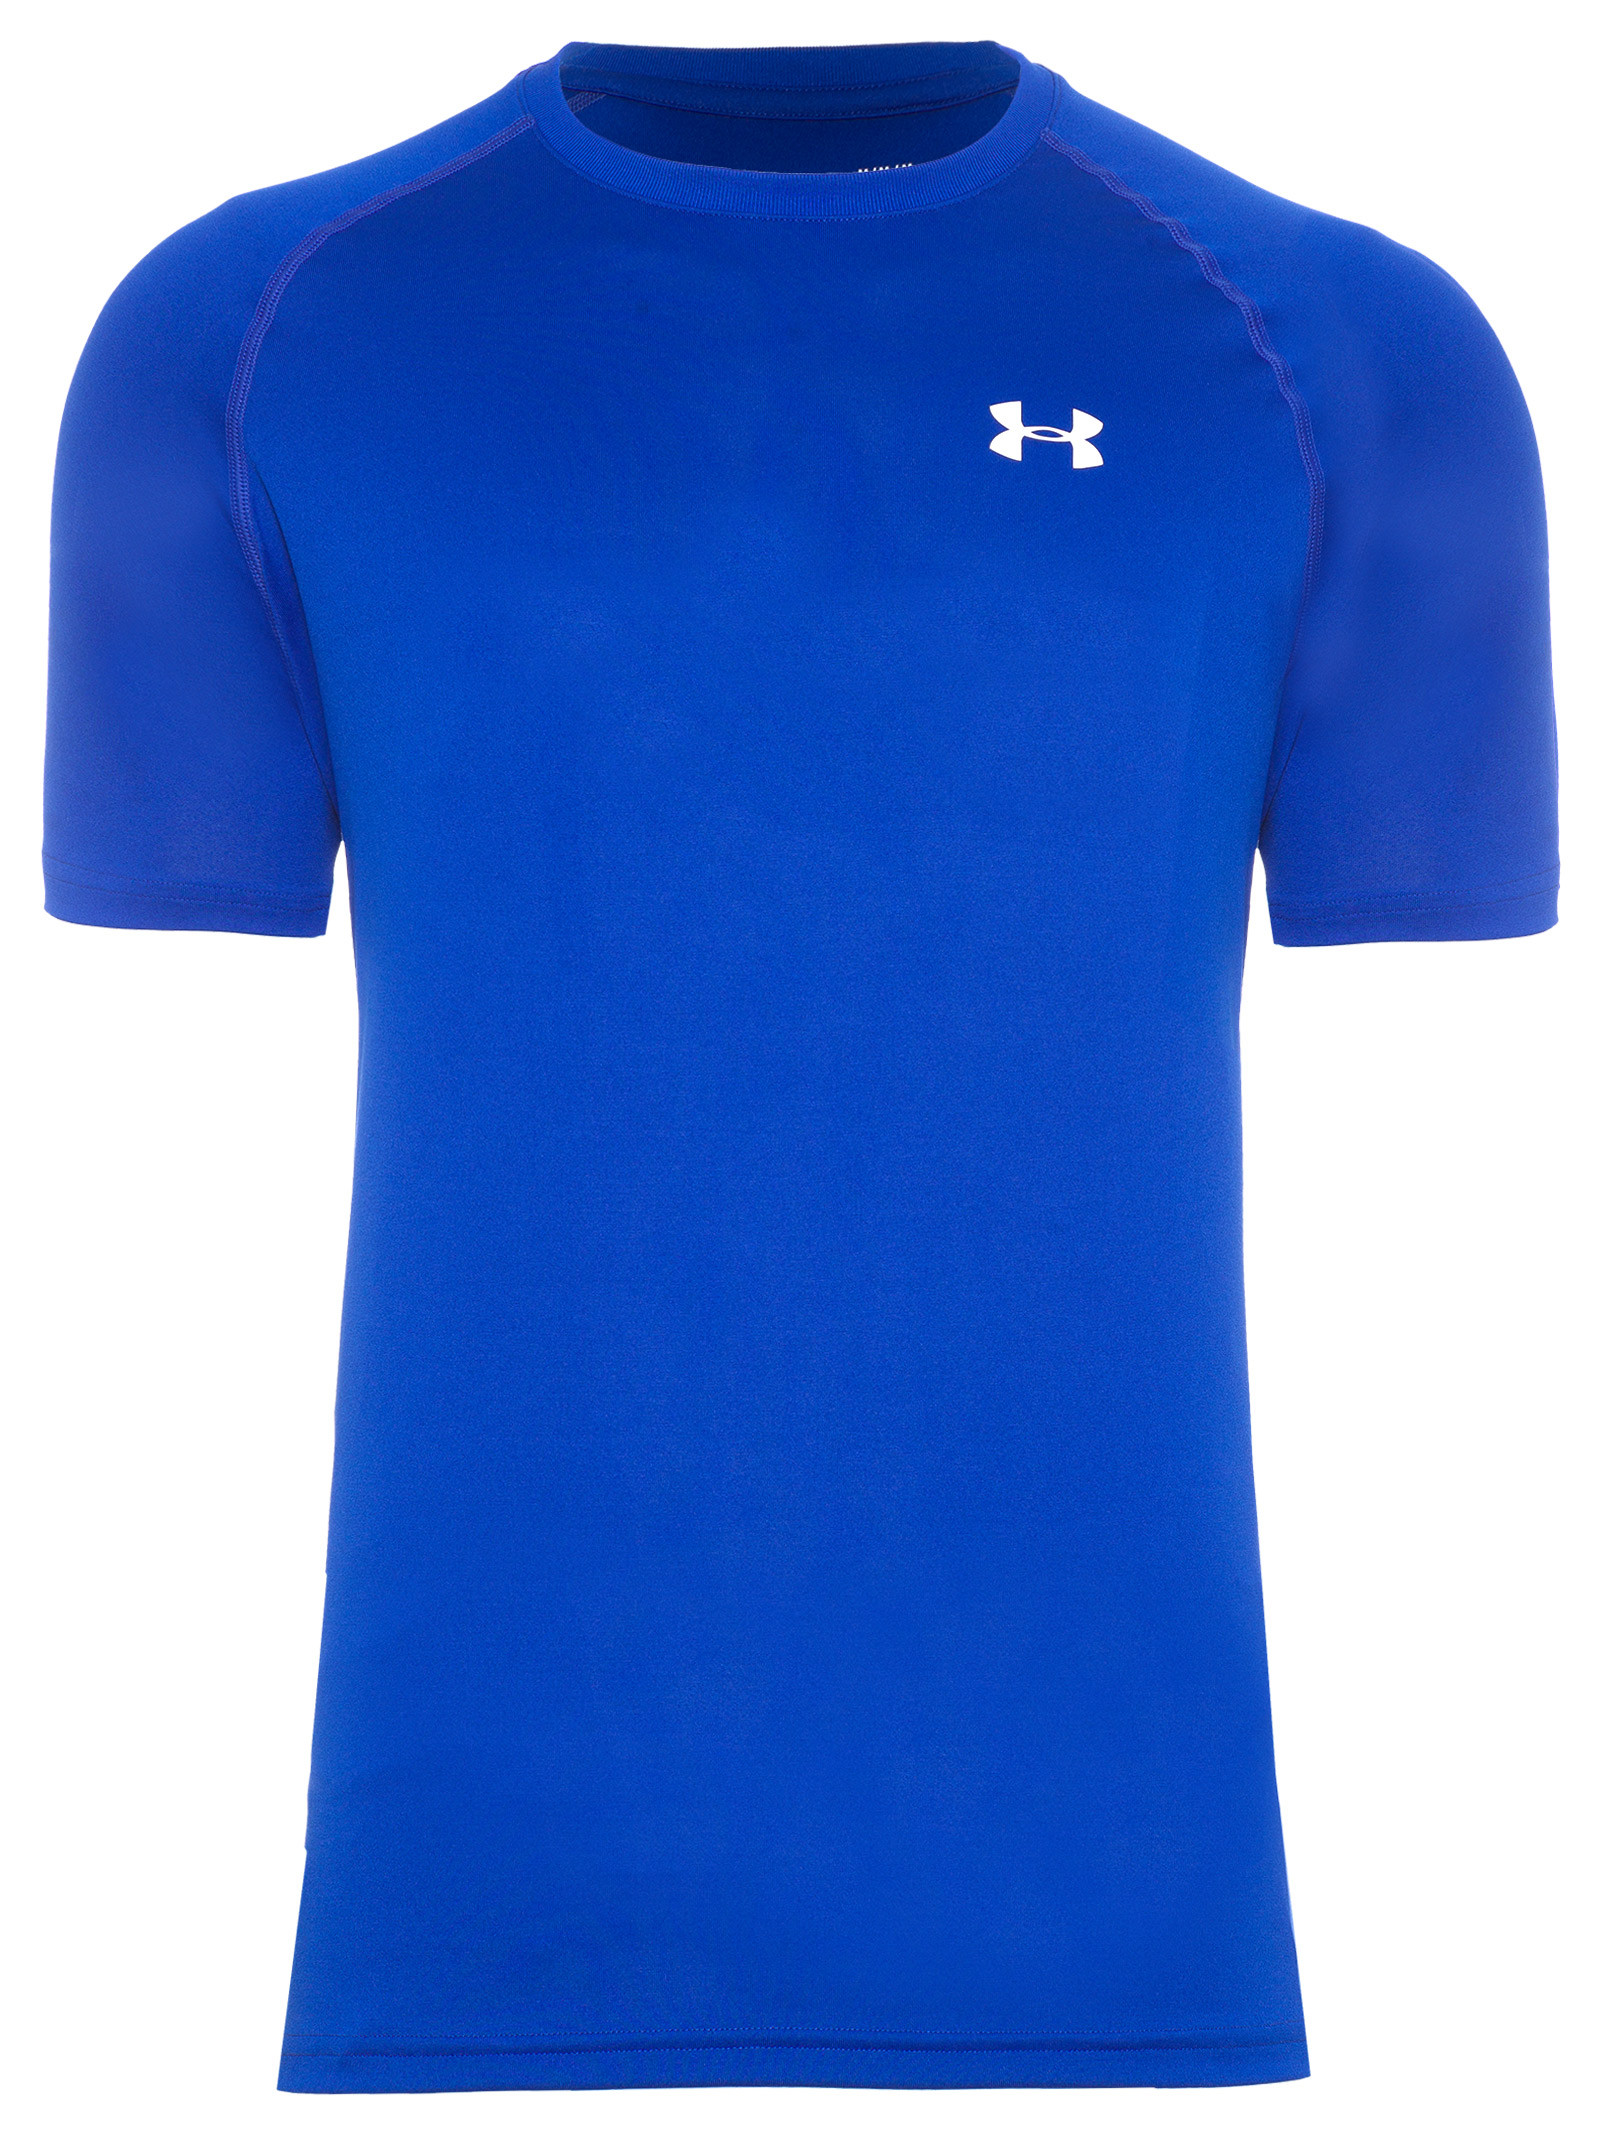 Camiseta Masculina Ua Tech - Under Armour - Azul - Shop2gether